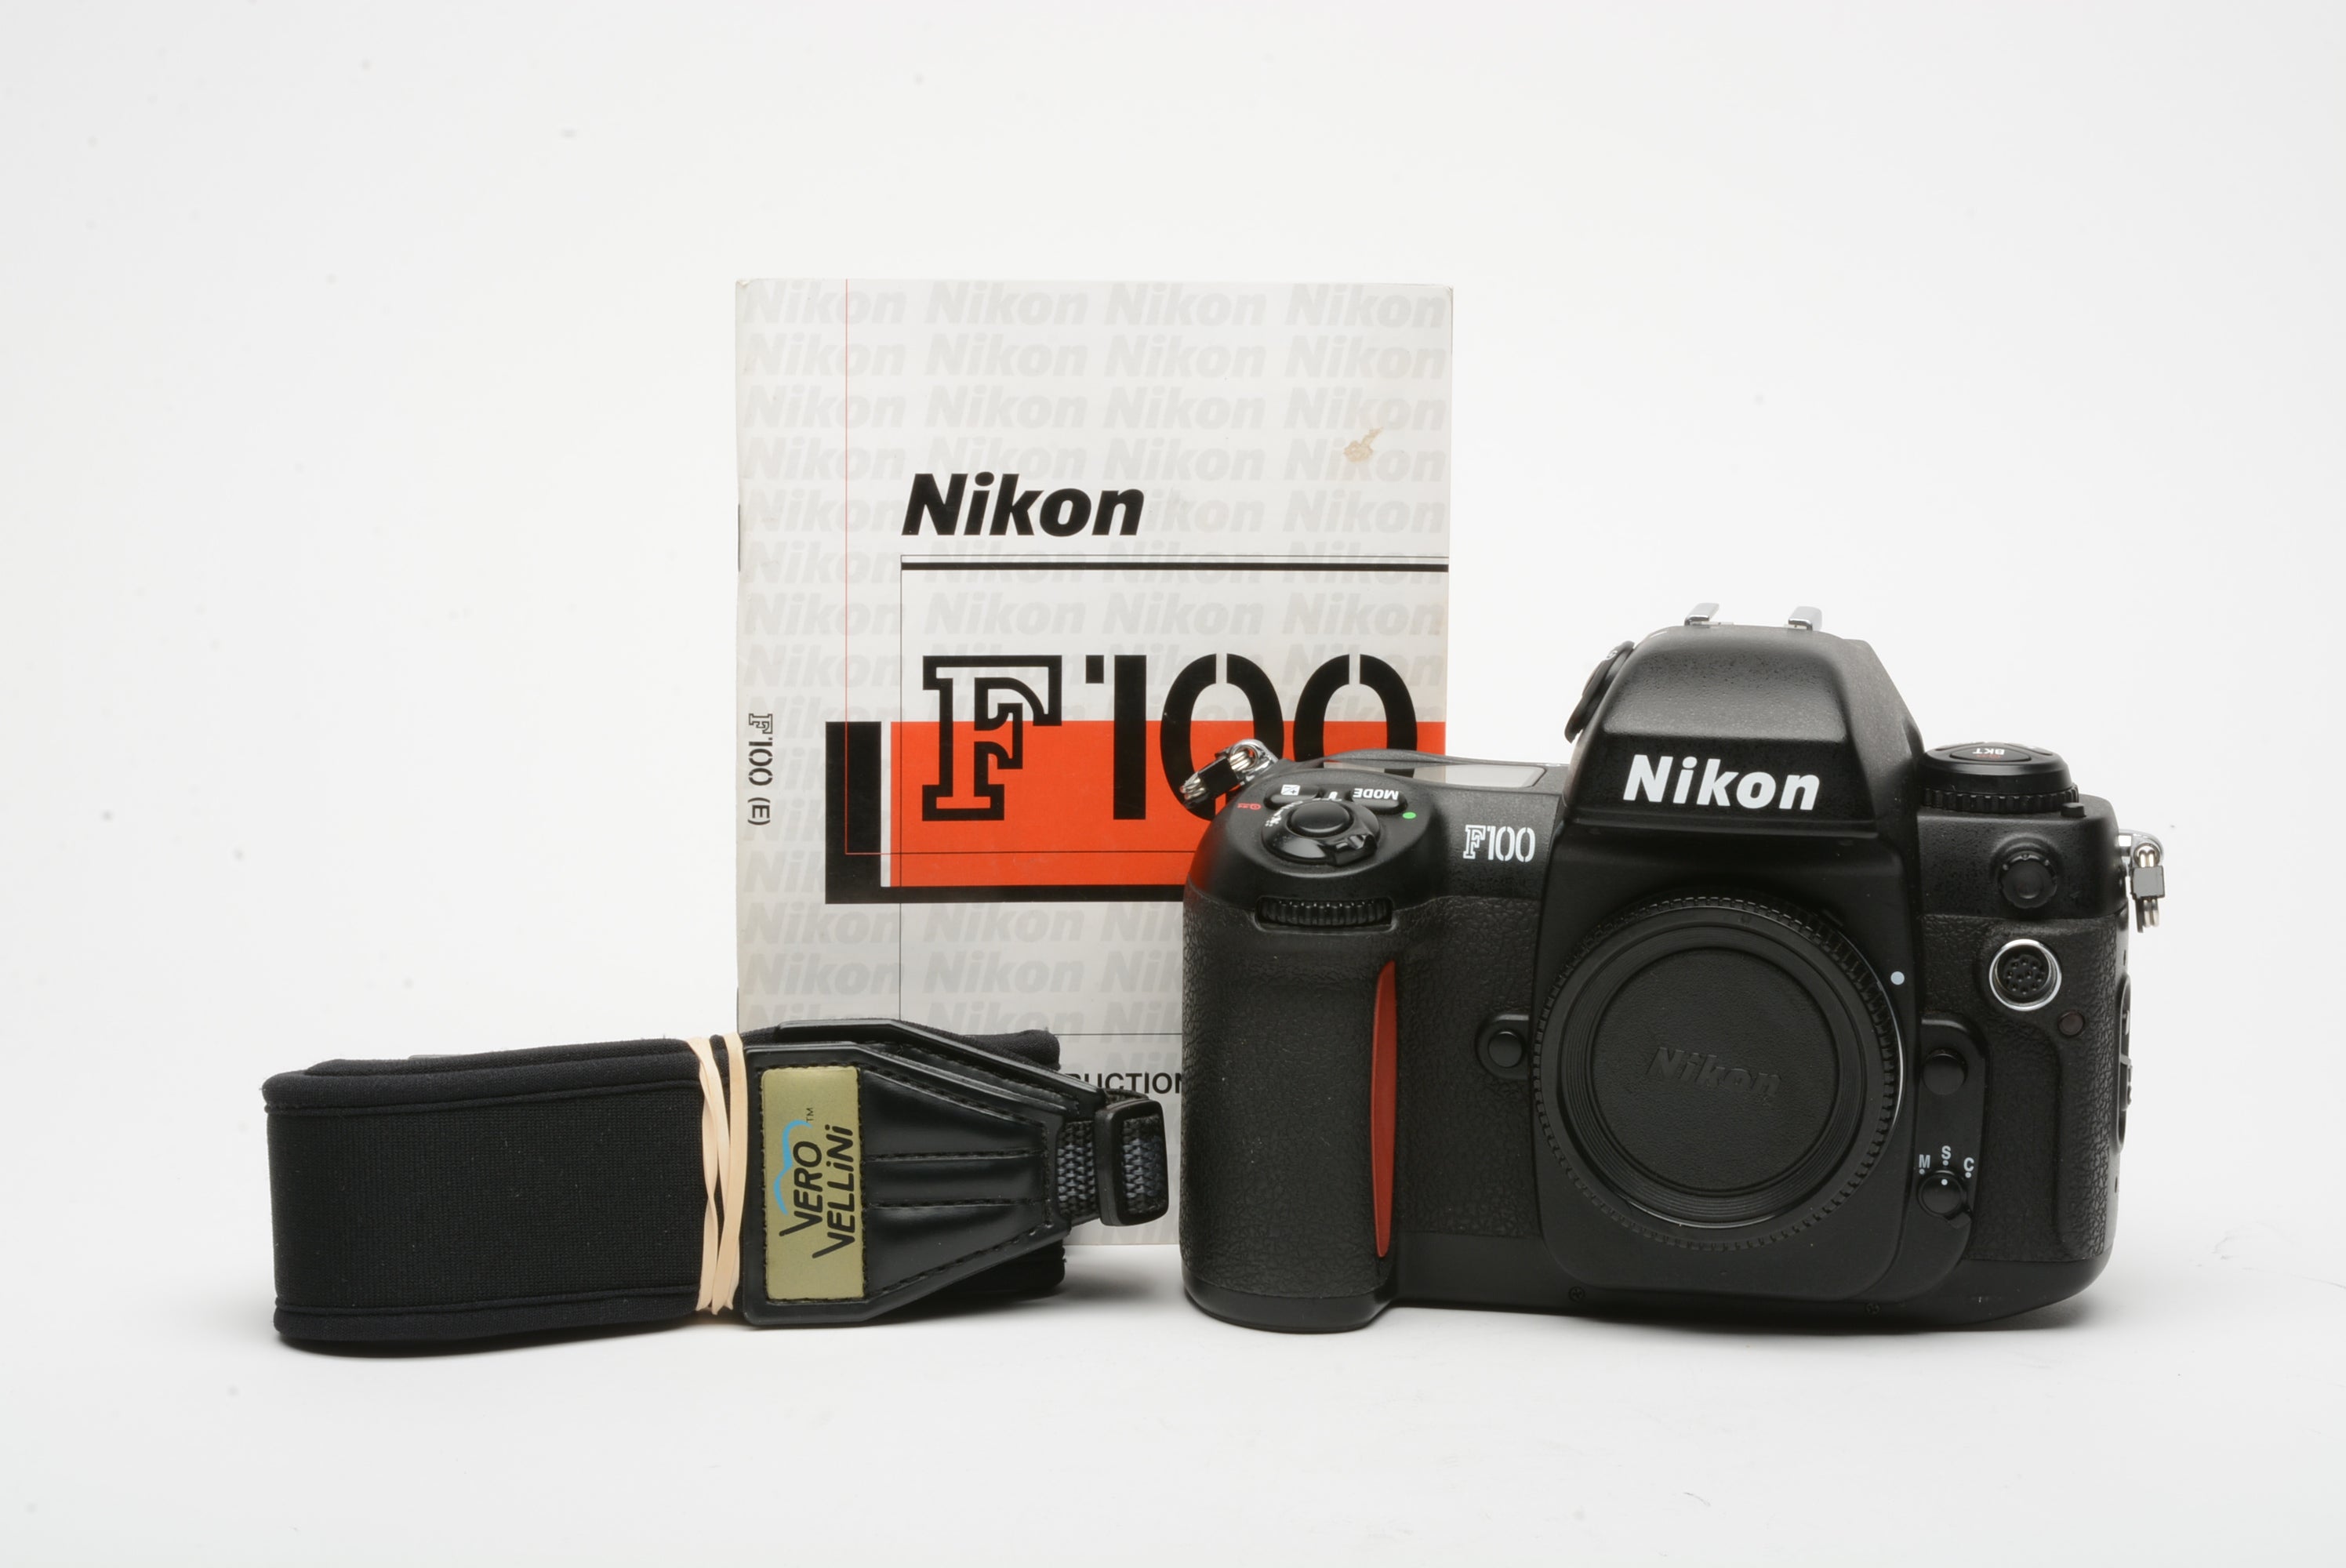 Nikon F100 35mm SLR body, strap, fully tested, great!